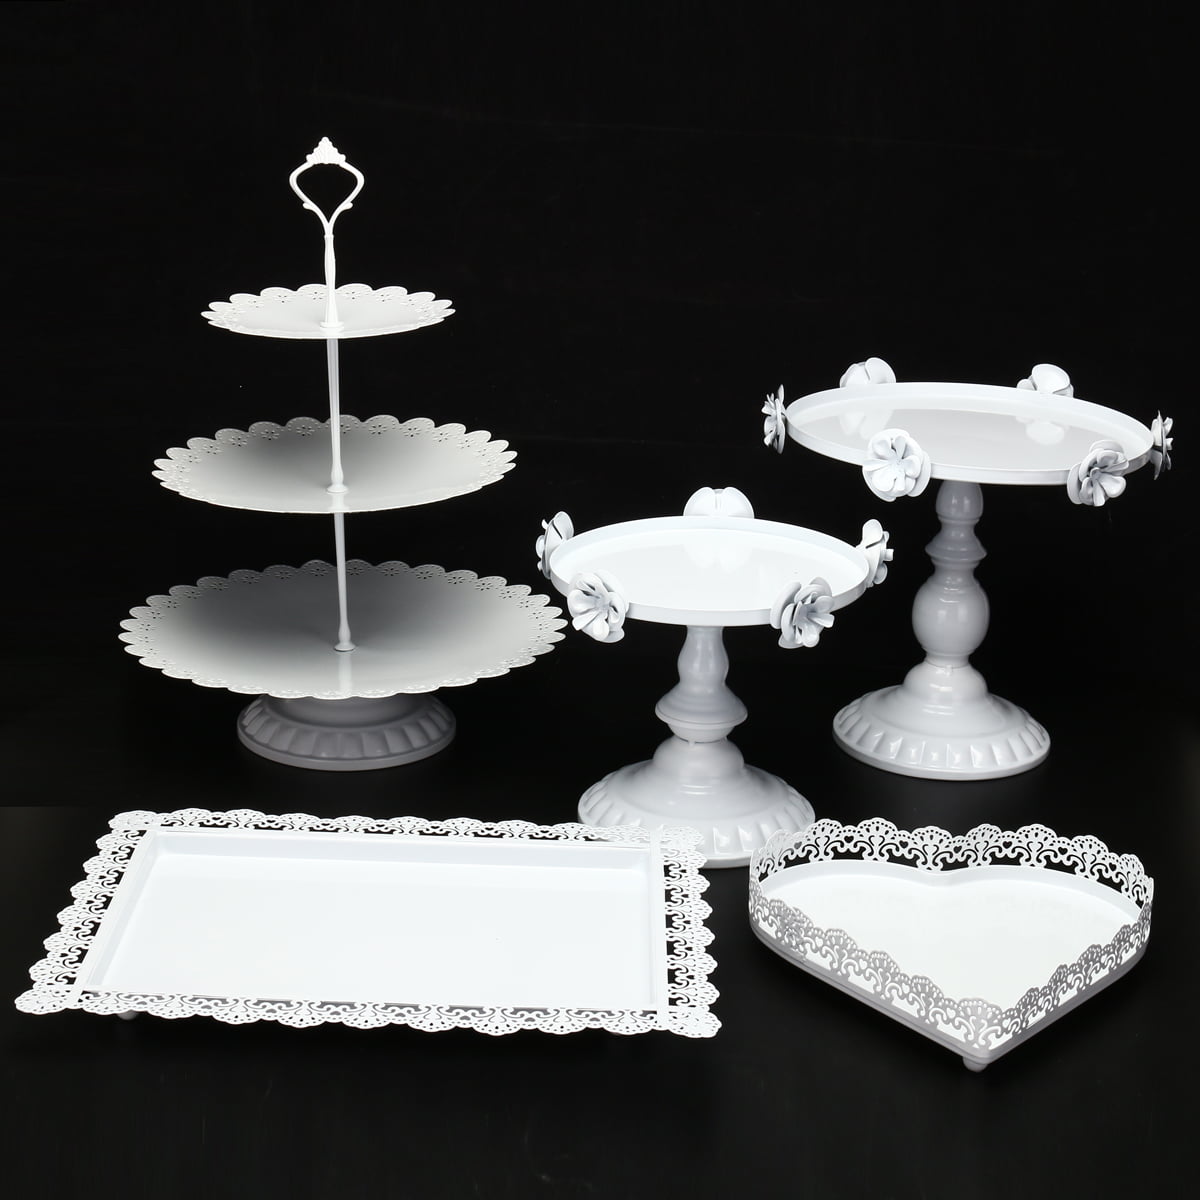 3 Pieces Cake Stand Set White Metal Cupcake Holder Dessert Display Plate Decor Serving Platter for Baby Shower Wedding Birthday Parties Celebration 